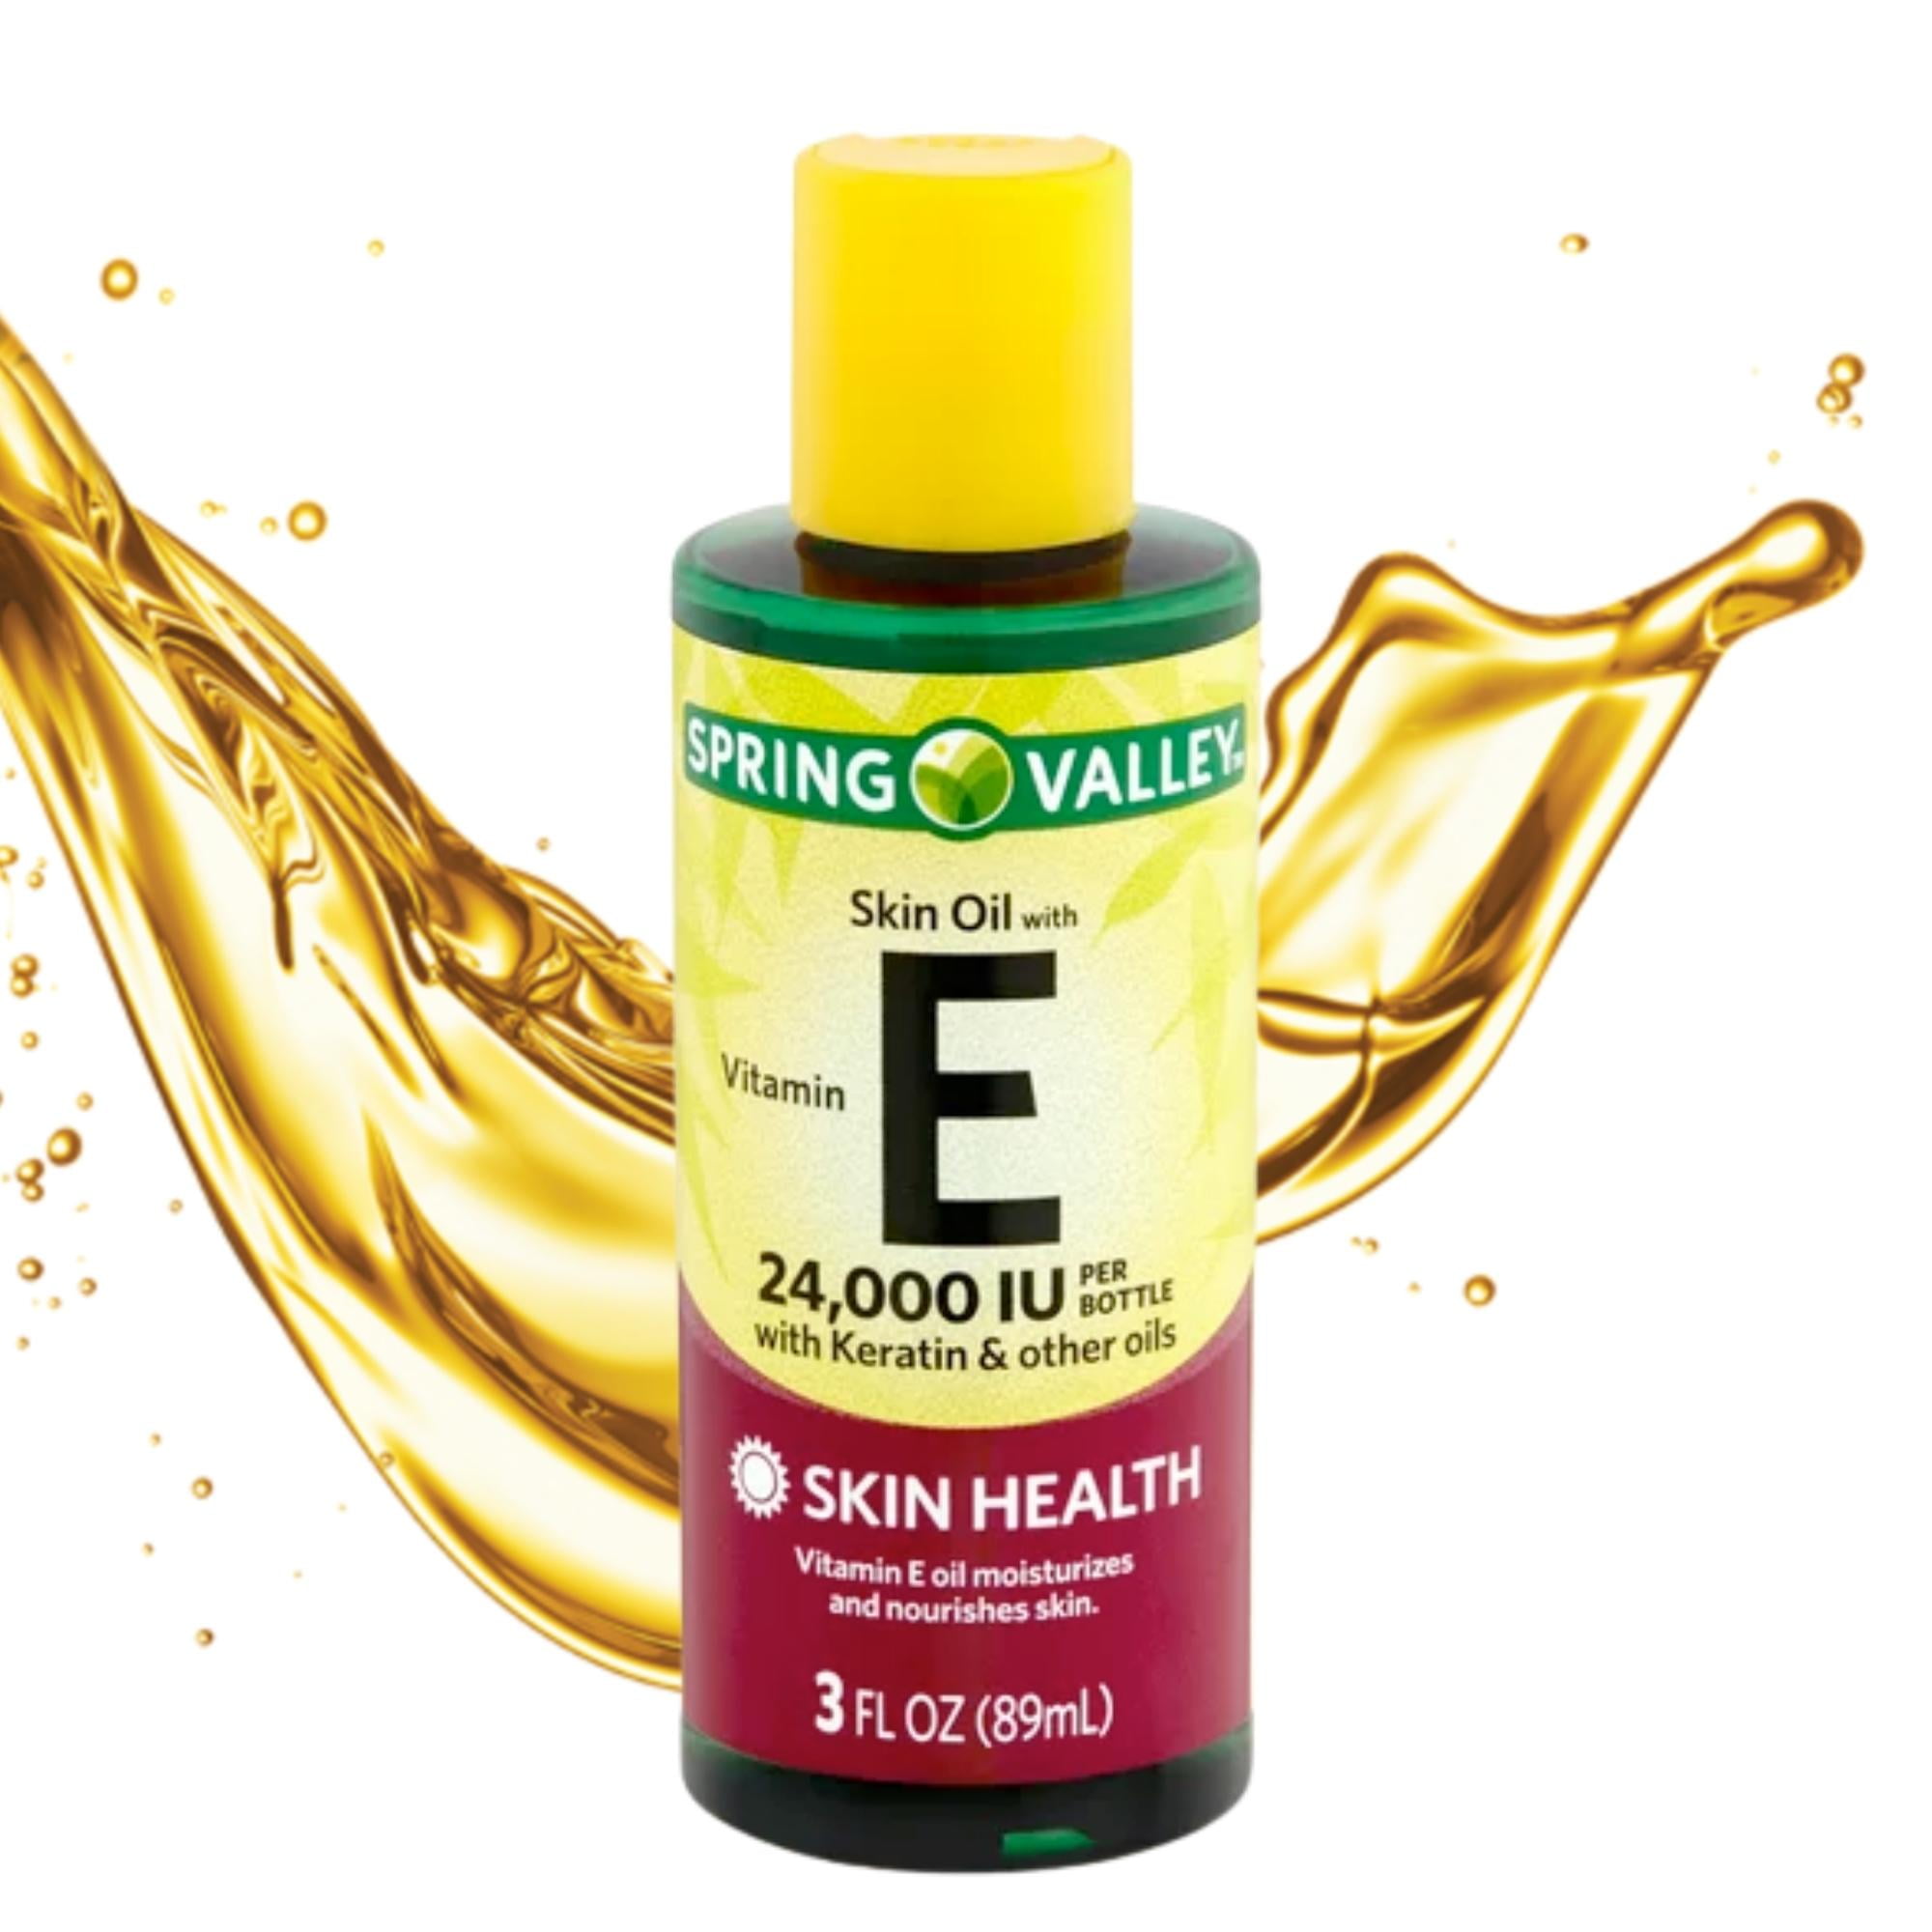 Spring Valley Skin Oil with Vitamin E, 24,000 IU, 3 fl oz